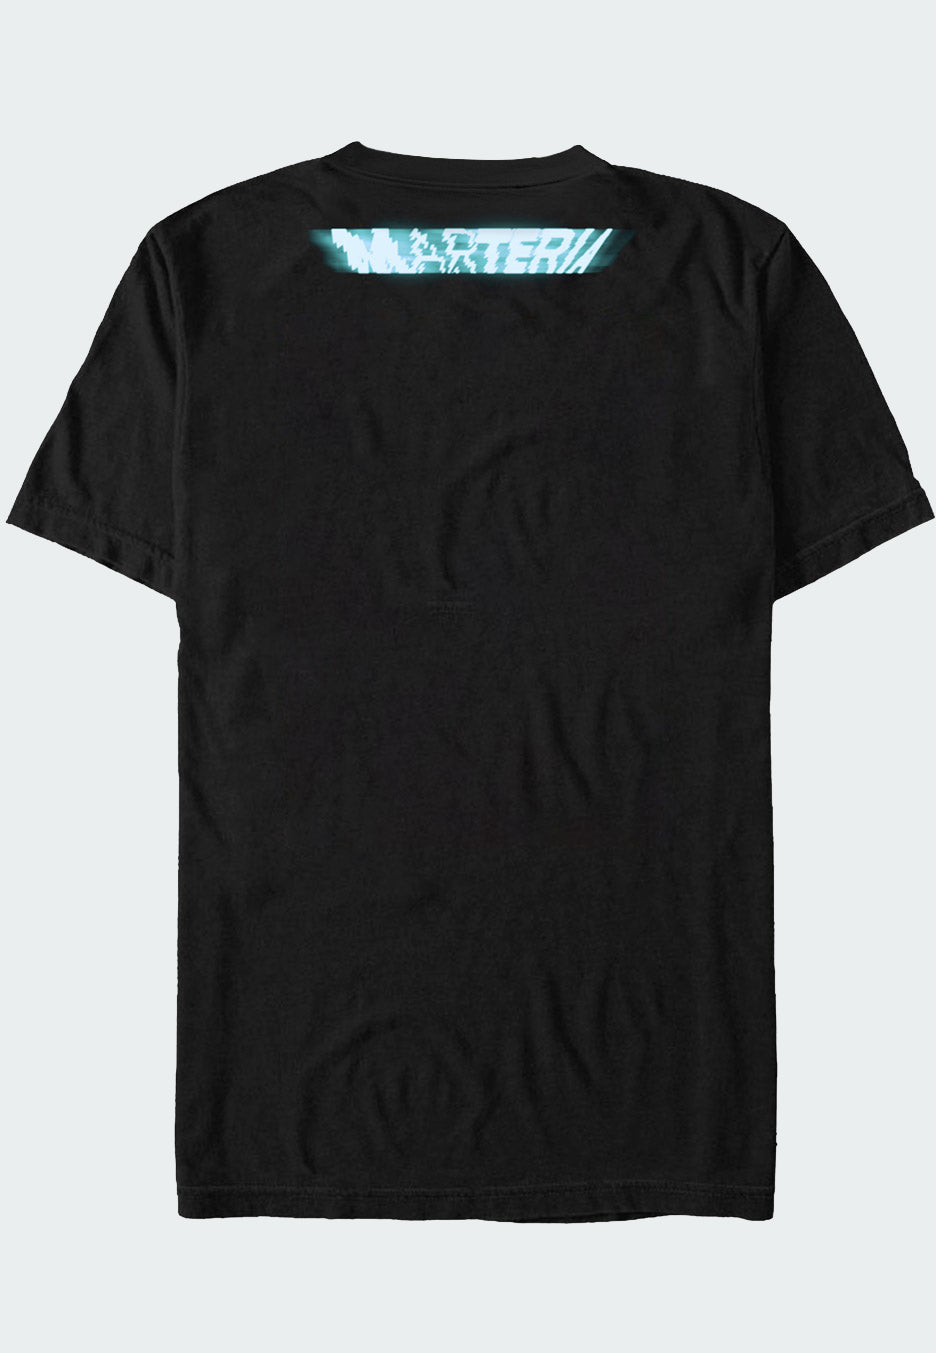 Marteria - Neon West - T-Shirt